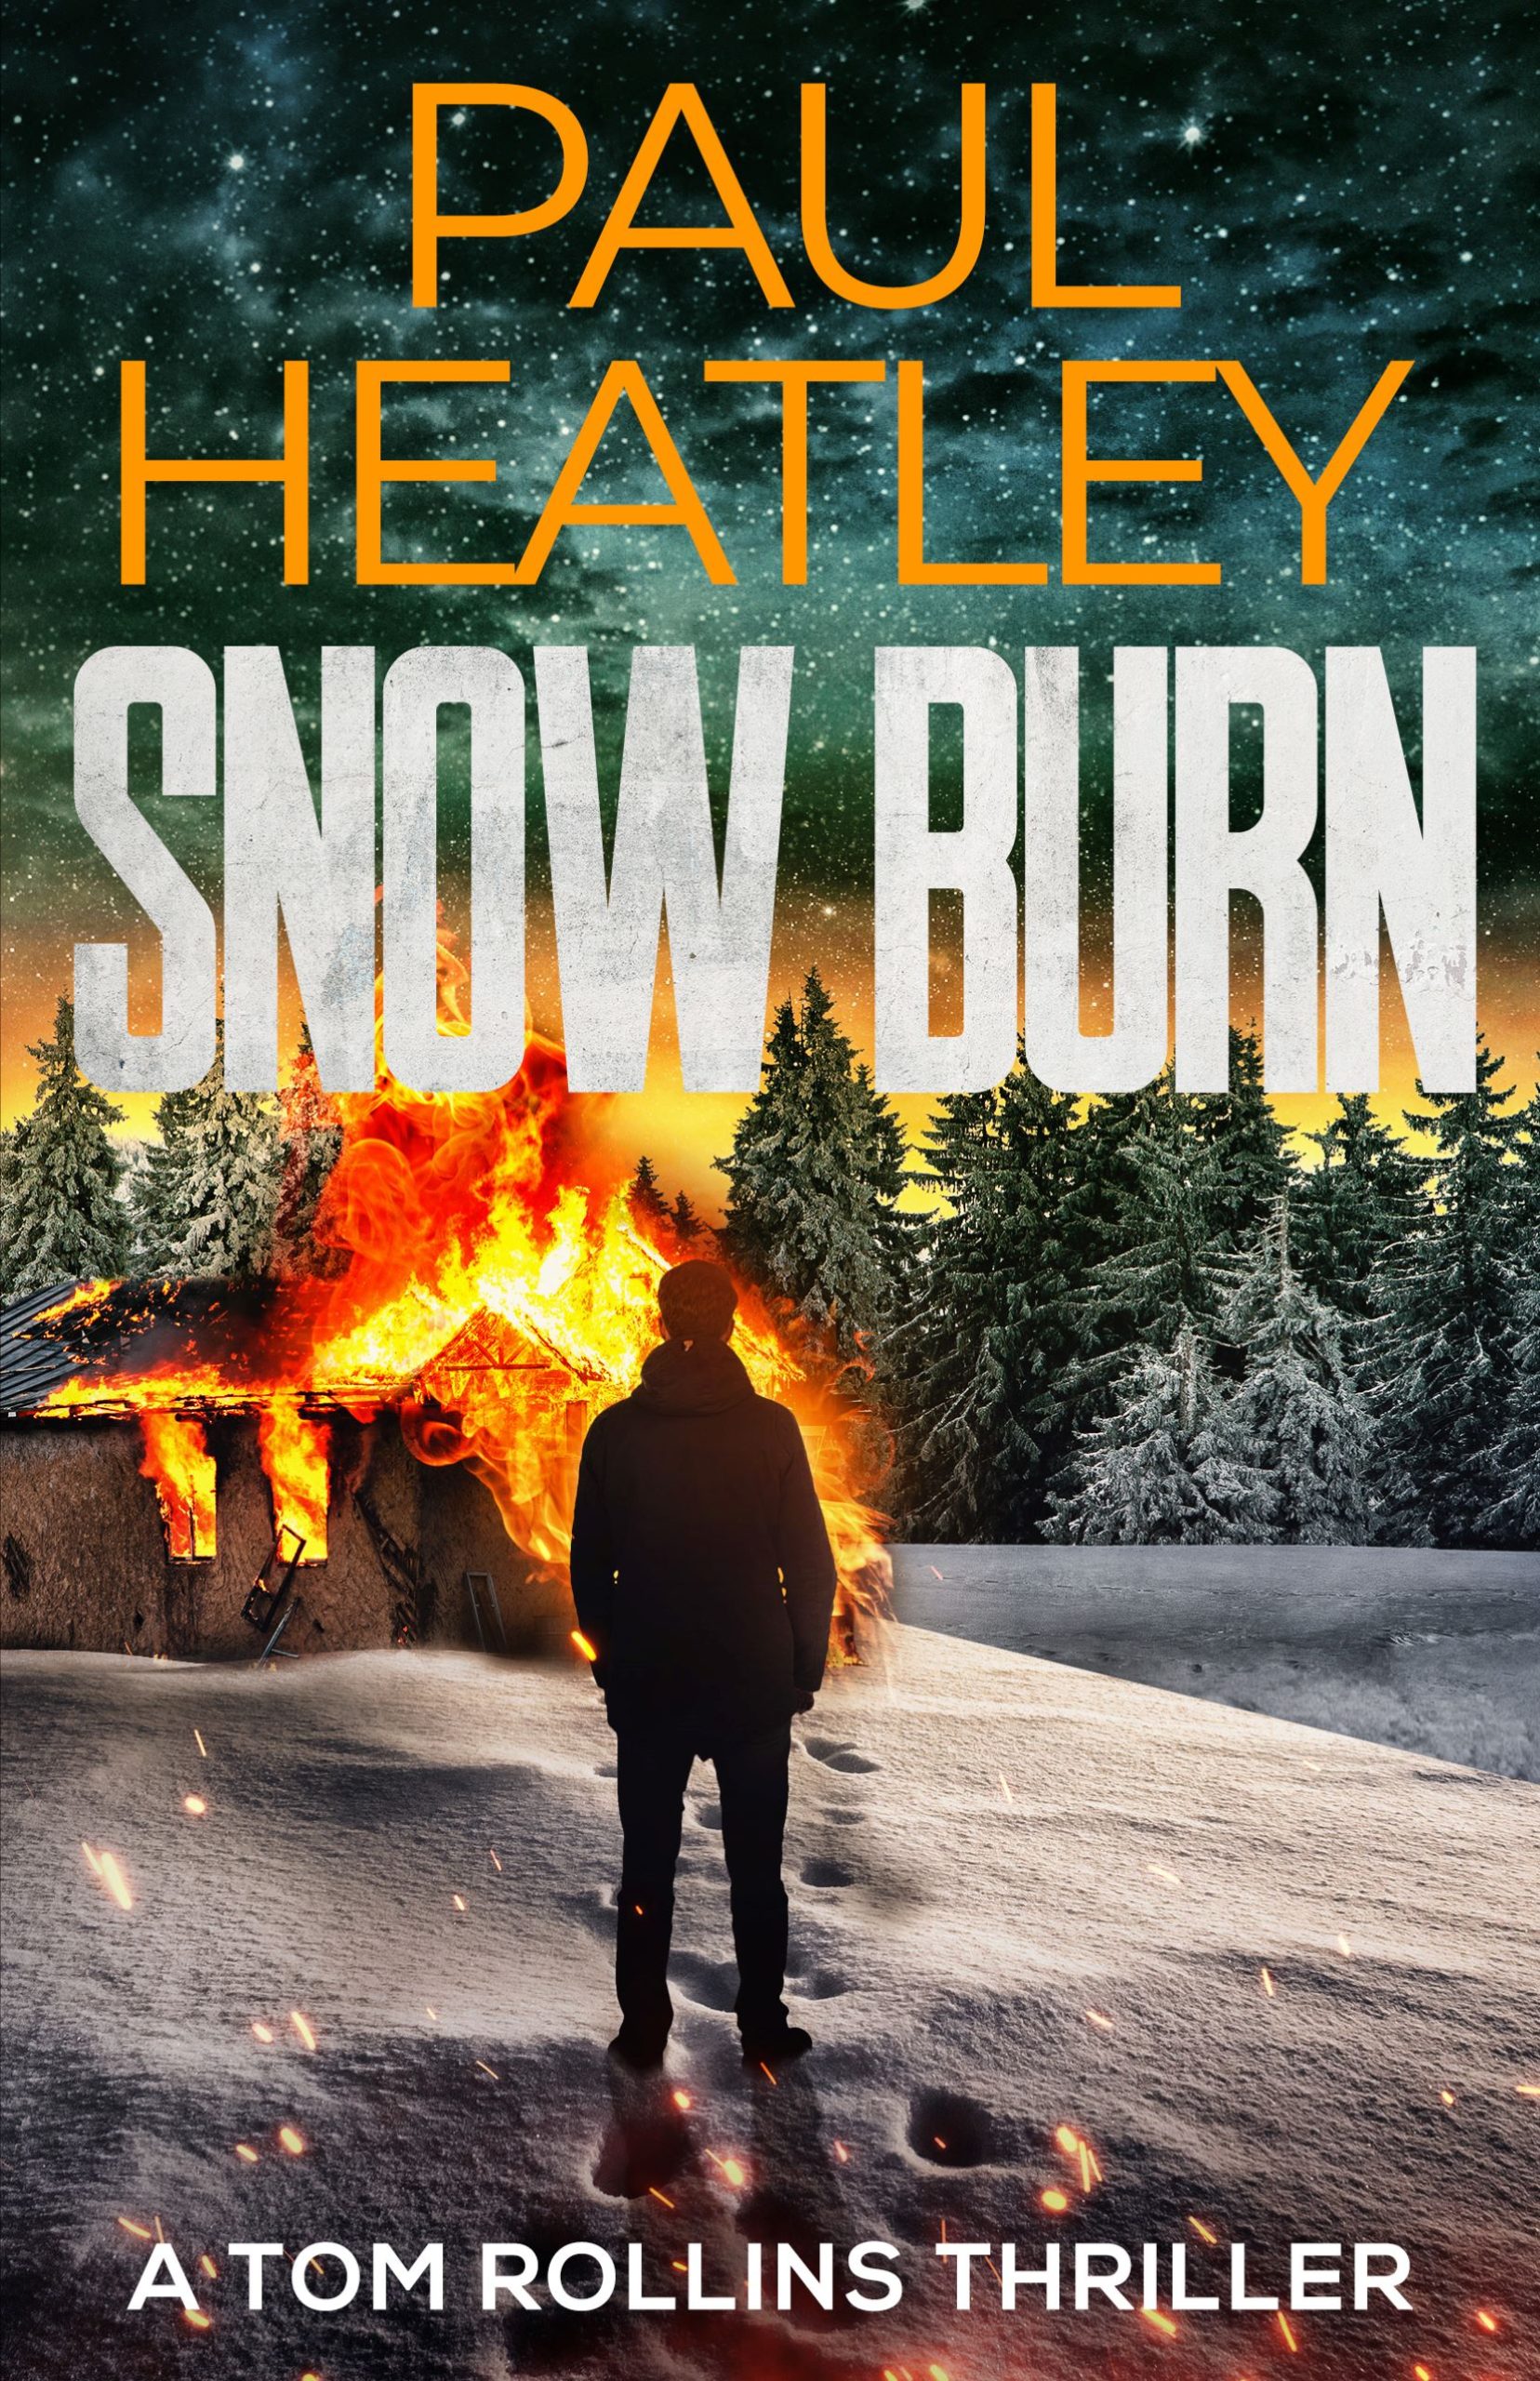 PAUL HEATLEY NEW RELEASE – SNOW BURN